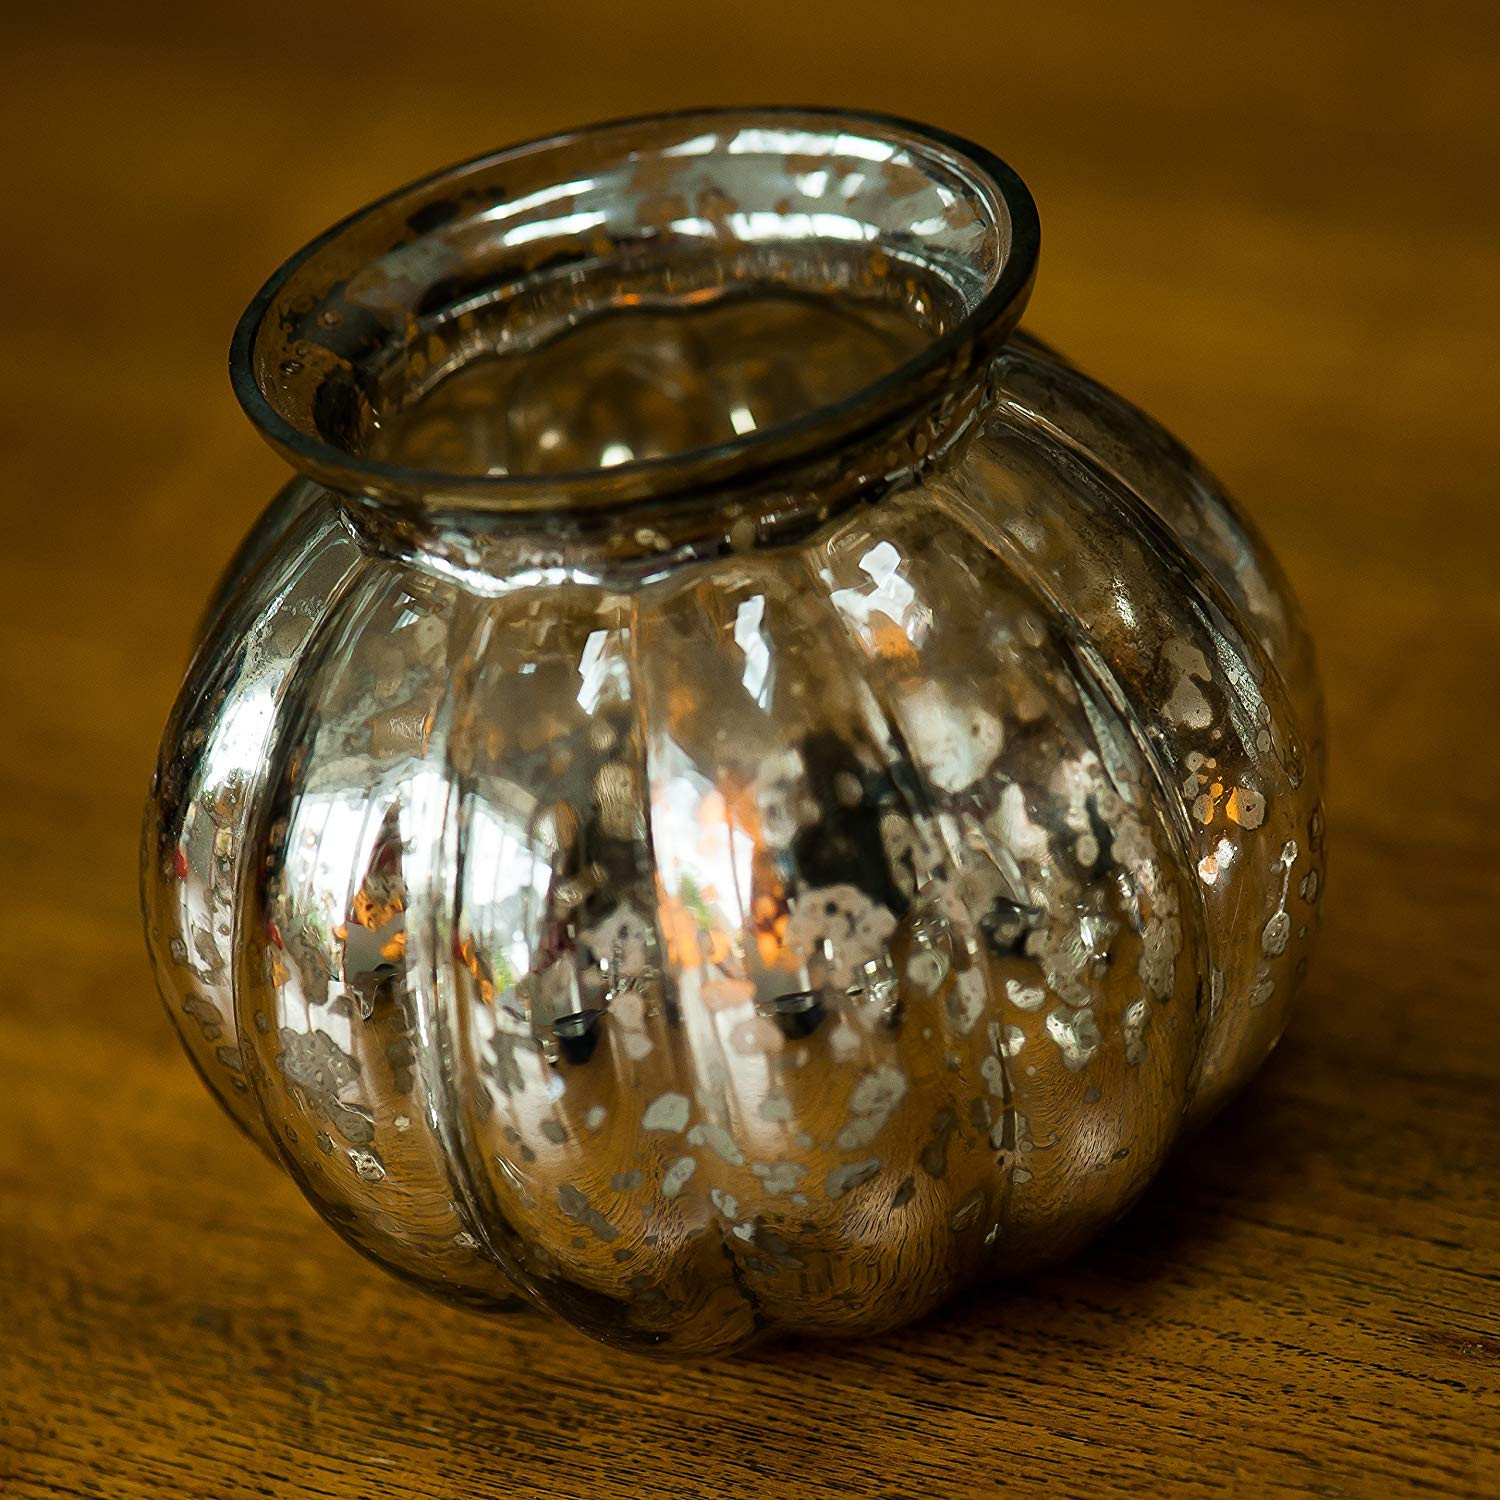 low round glass vase of insideretail mercury glass mini round vase silver 13 cm set of 3 inside insideretail mercury glass mini round vase silver 13 cm set of 3 amazon co uk kitchen home